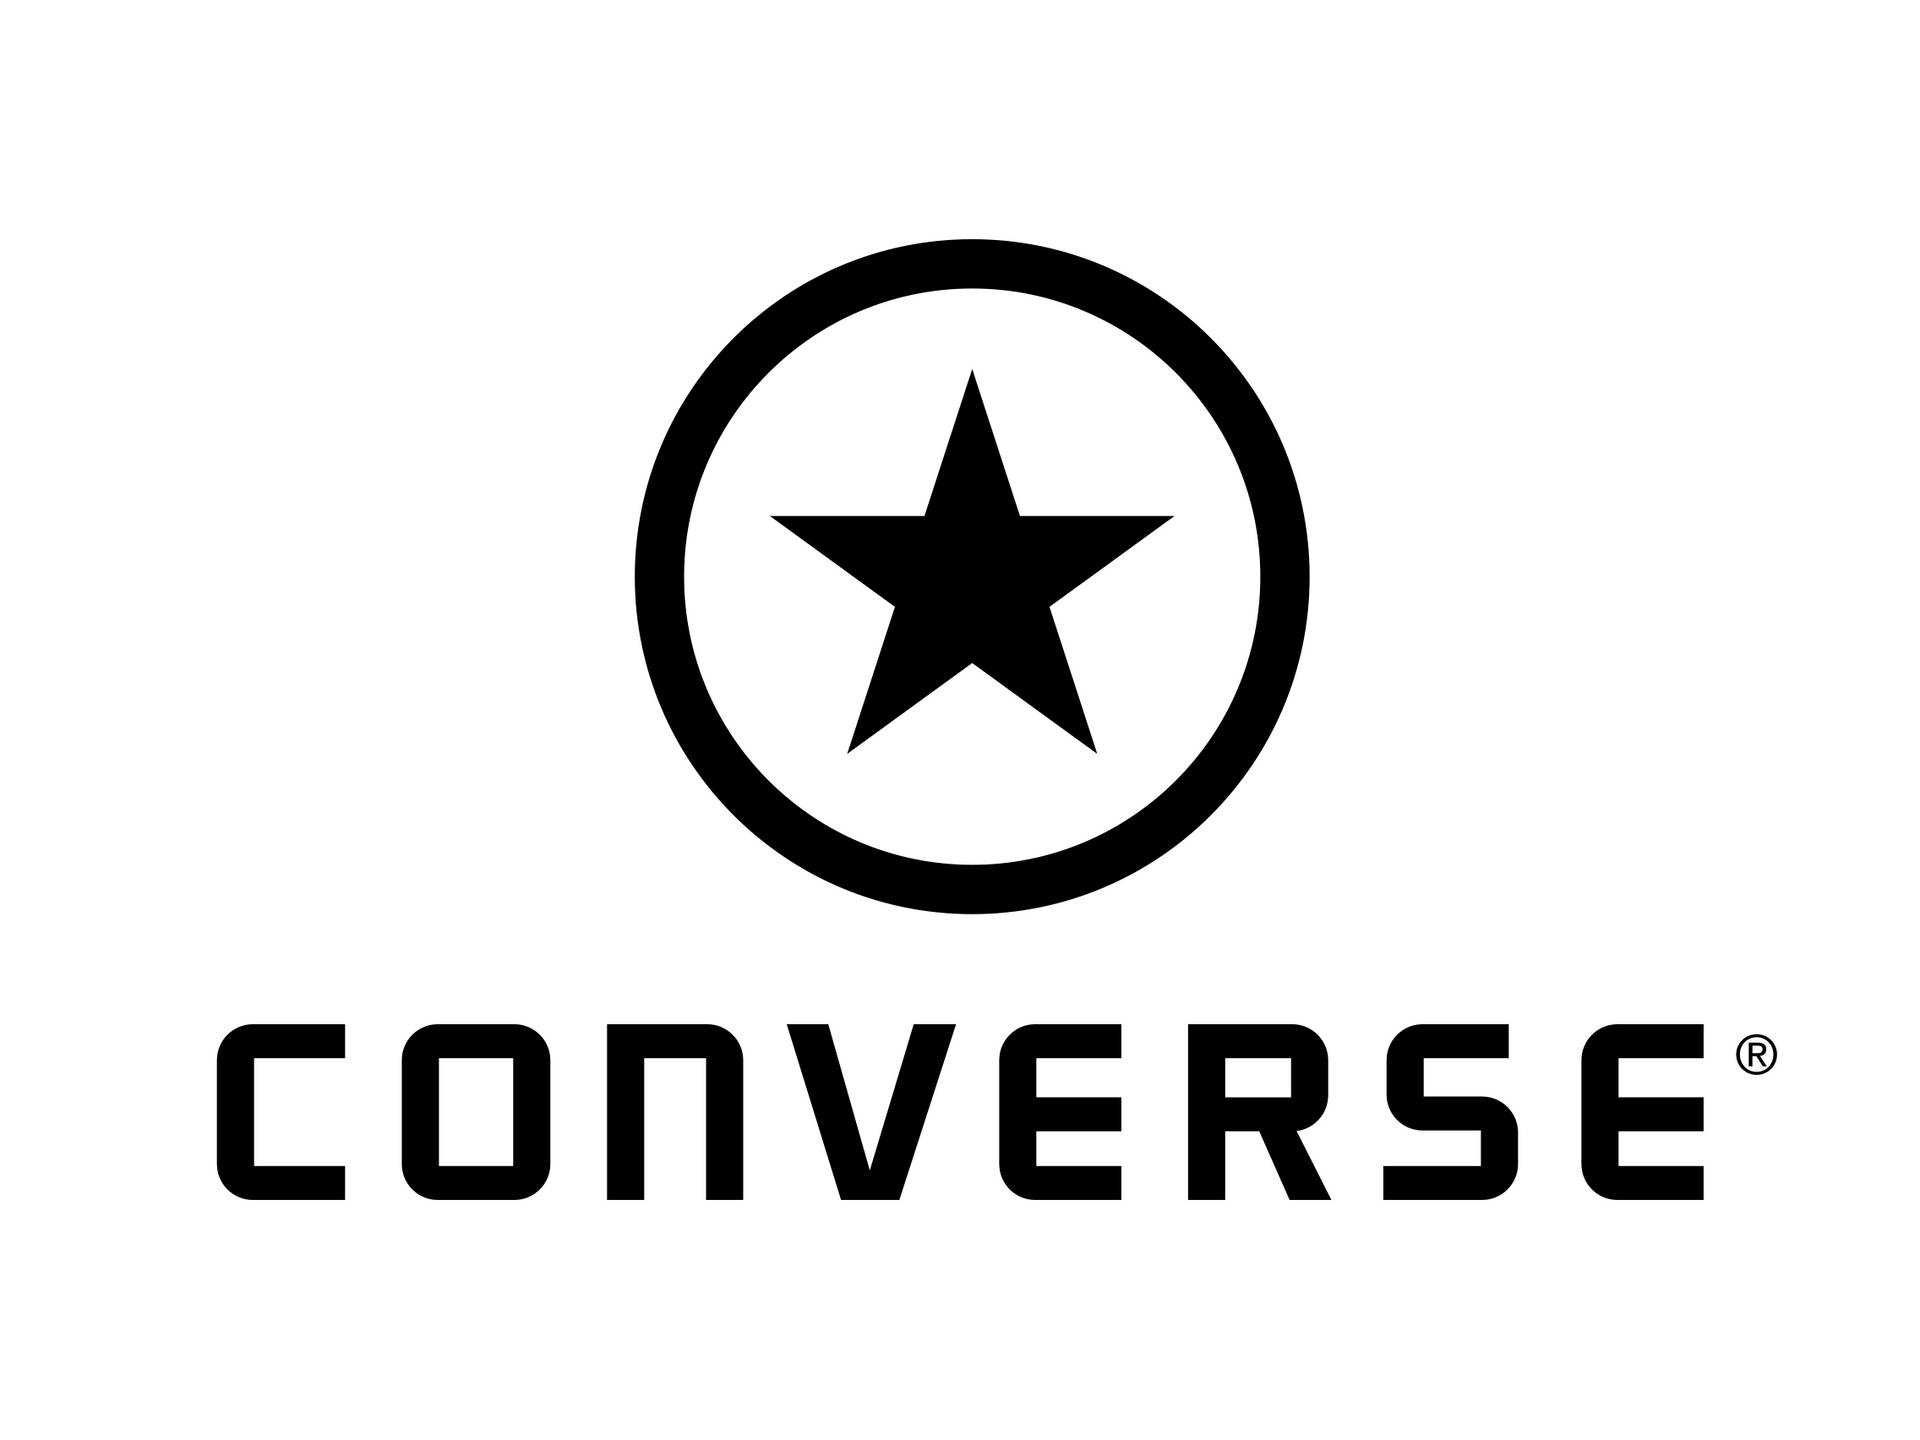 2003 Black Converse Logo Background